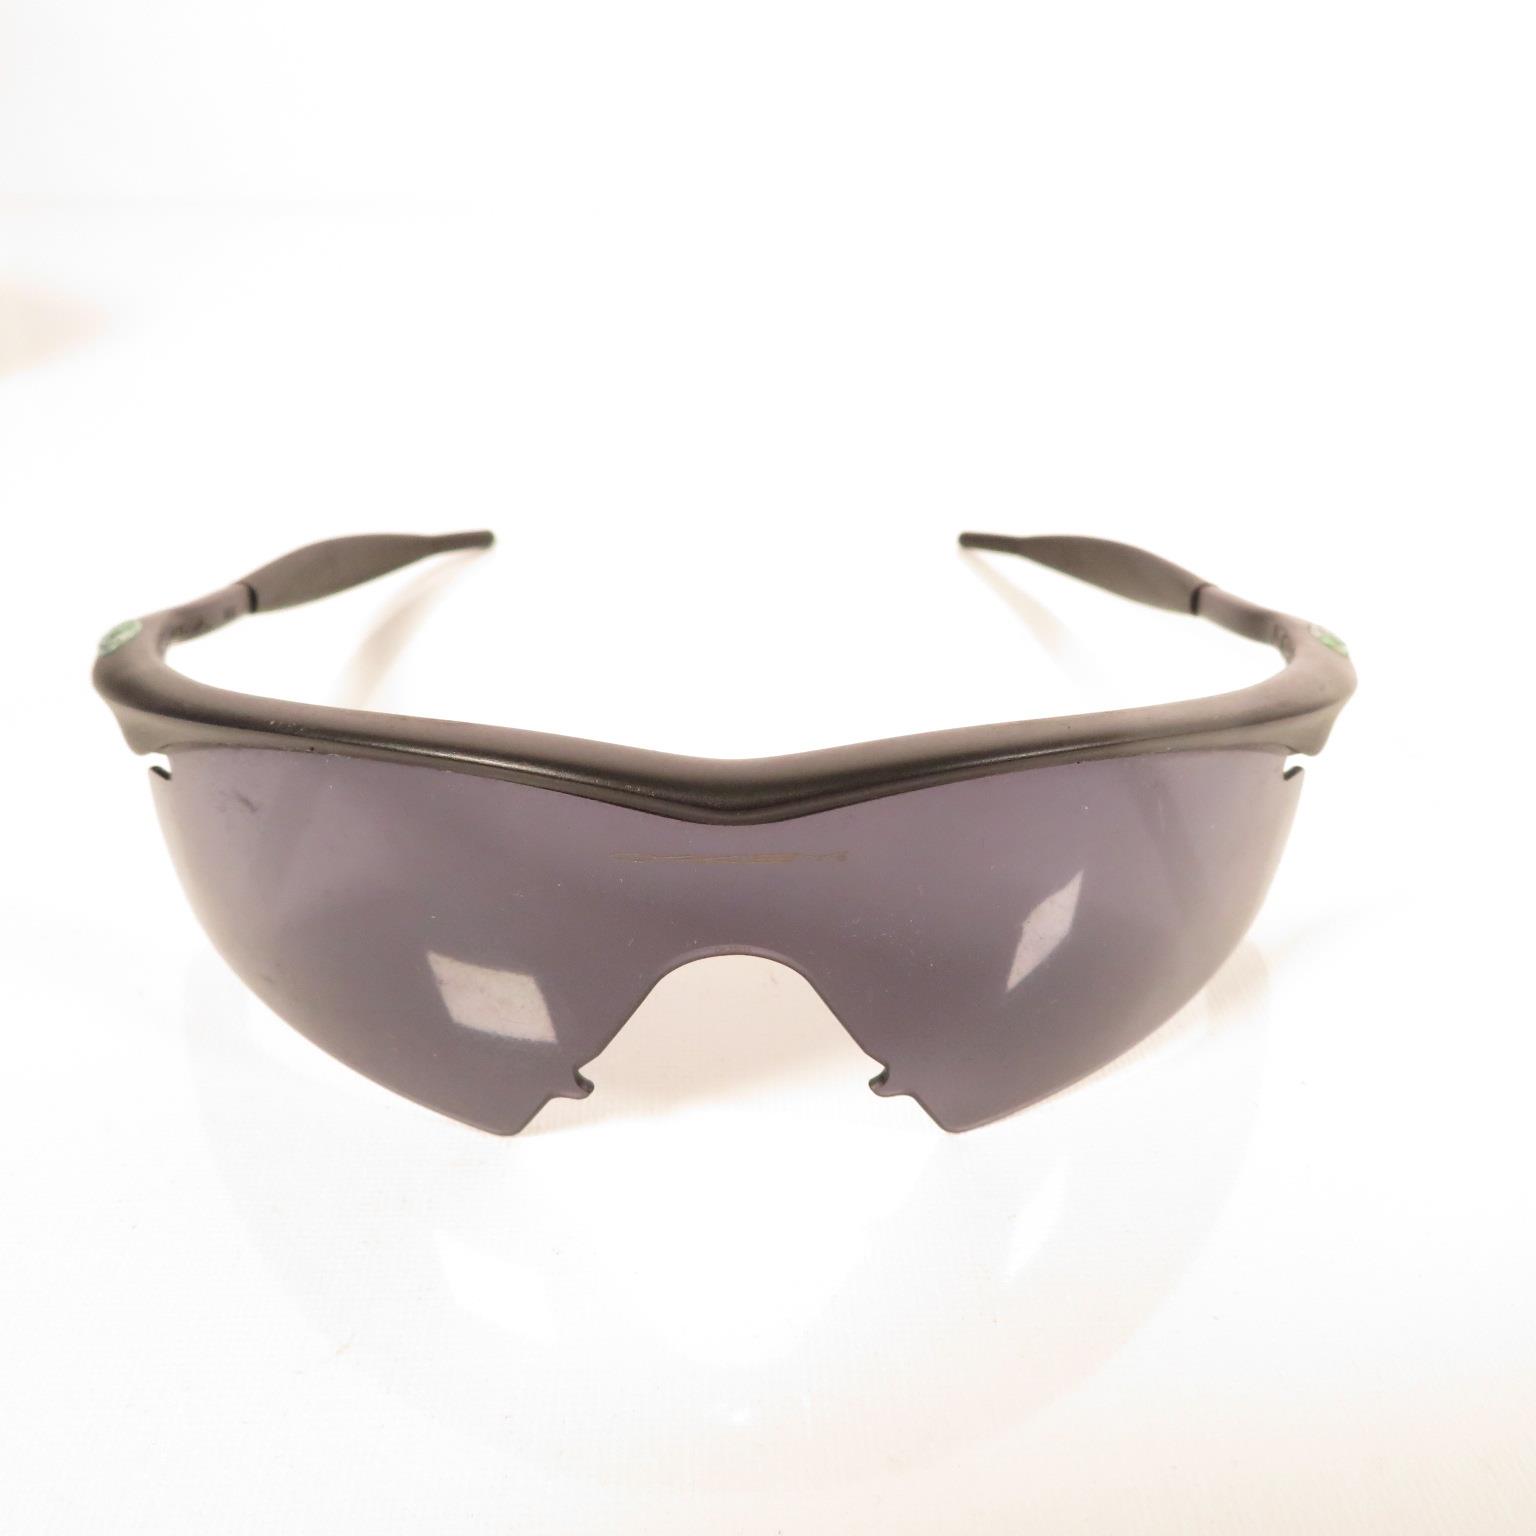 Pair of Porsche Folding Sunglasses, Per Sol folding Sunglasses, Oakley sunglasses and Porsche design - Image 3 of 17